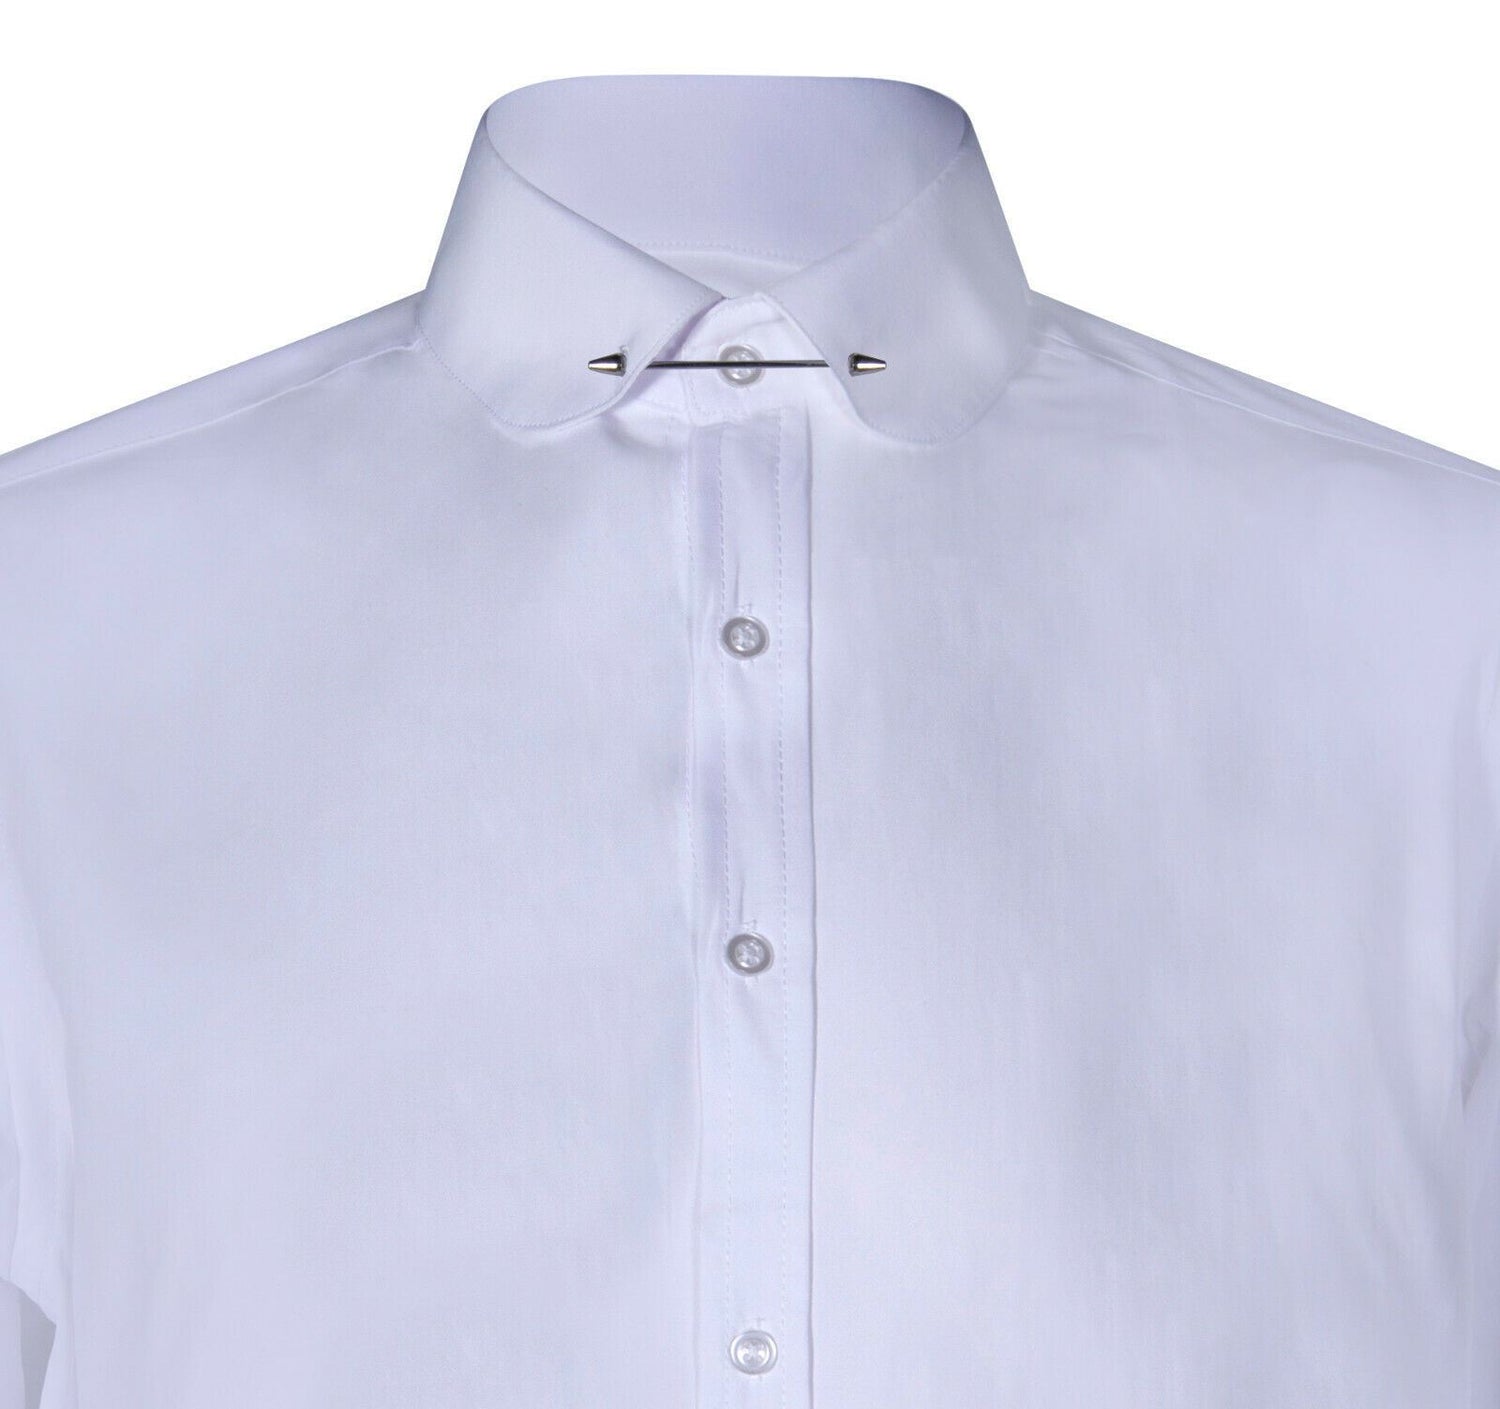 Mens Club Collar White Shirt 1920s Peaky Blinders With Bar Poplin Pin Smart - Upperclass Fashions 